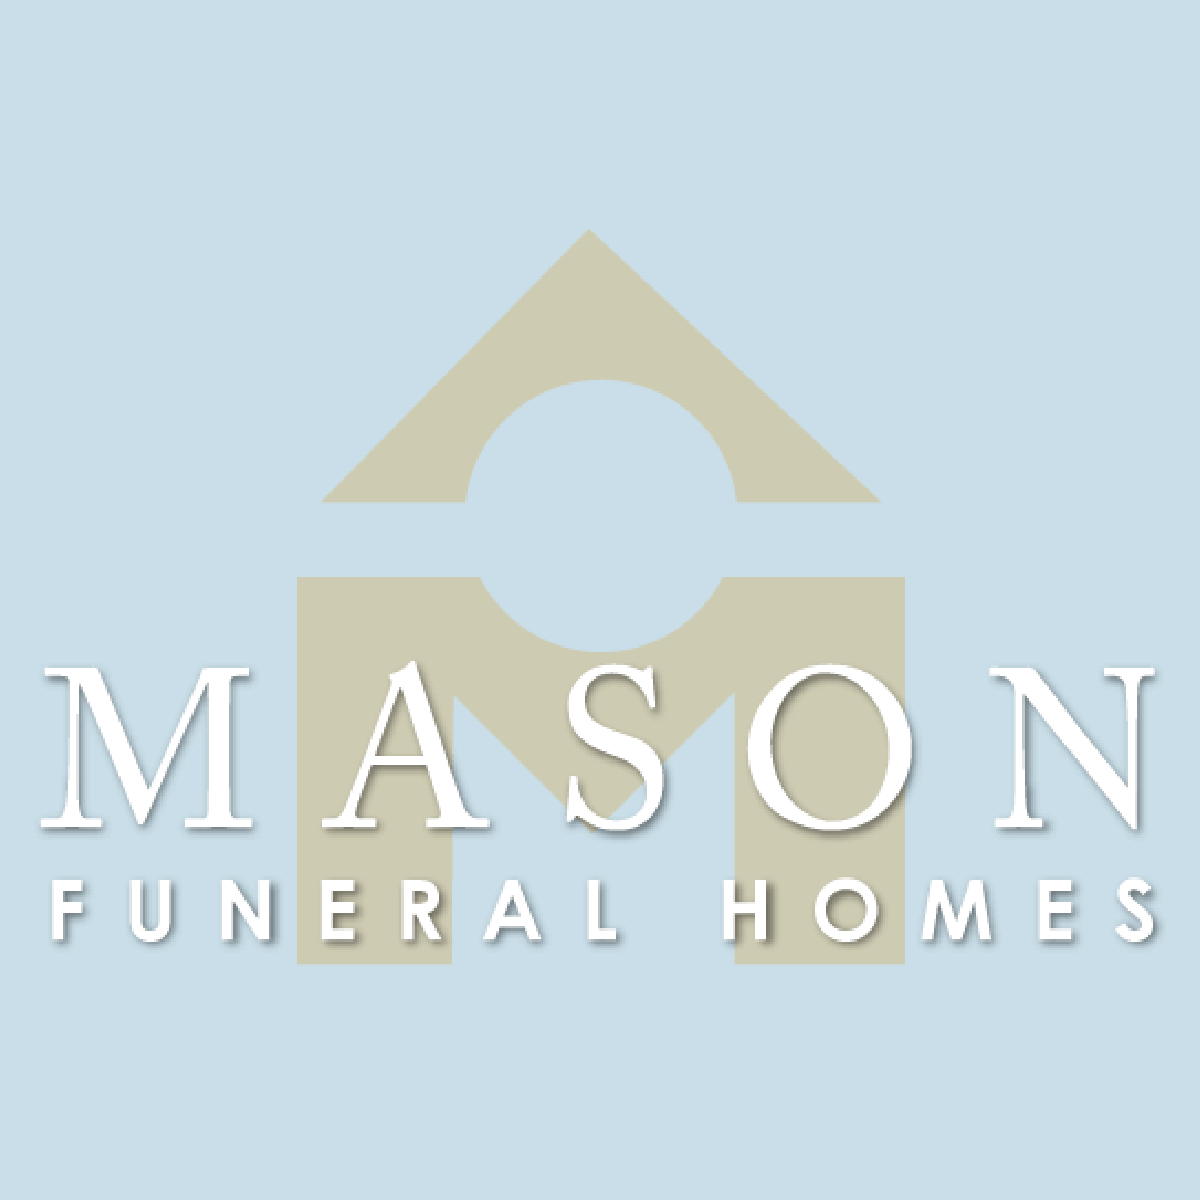 Mason Funeral Home